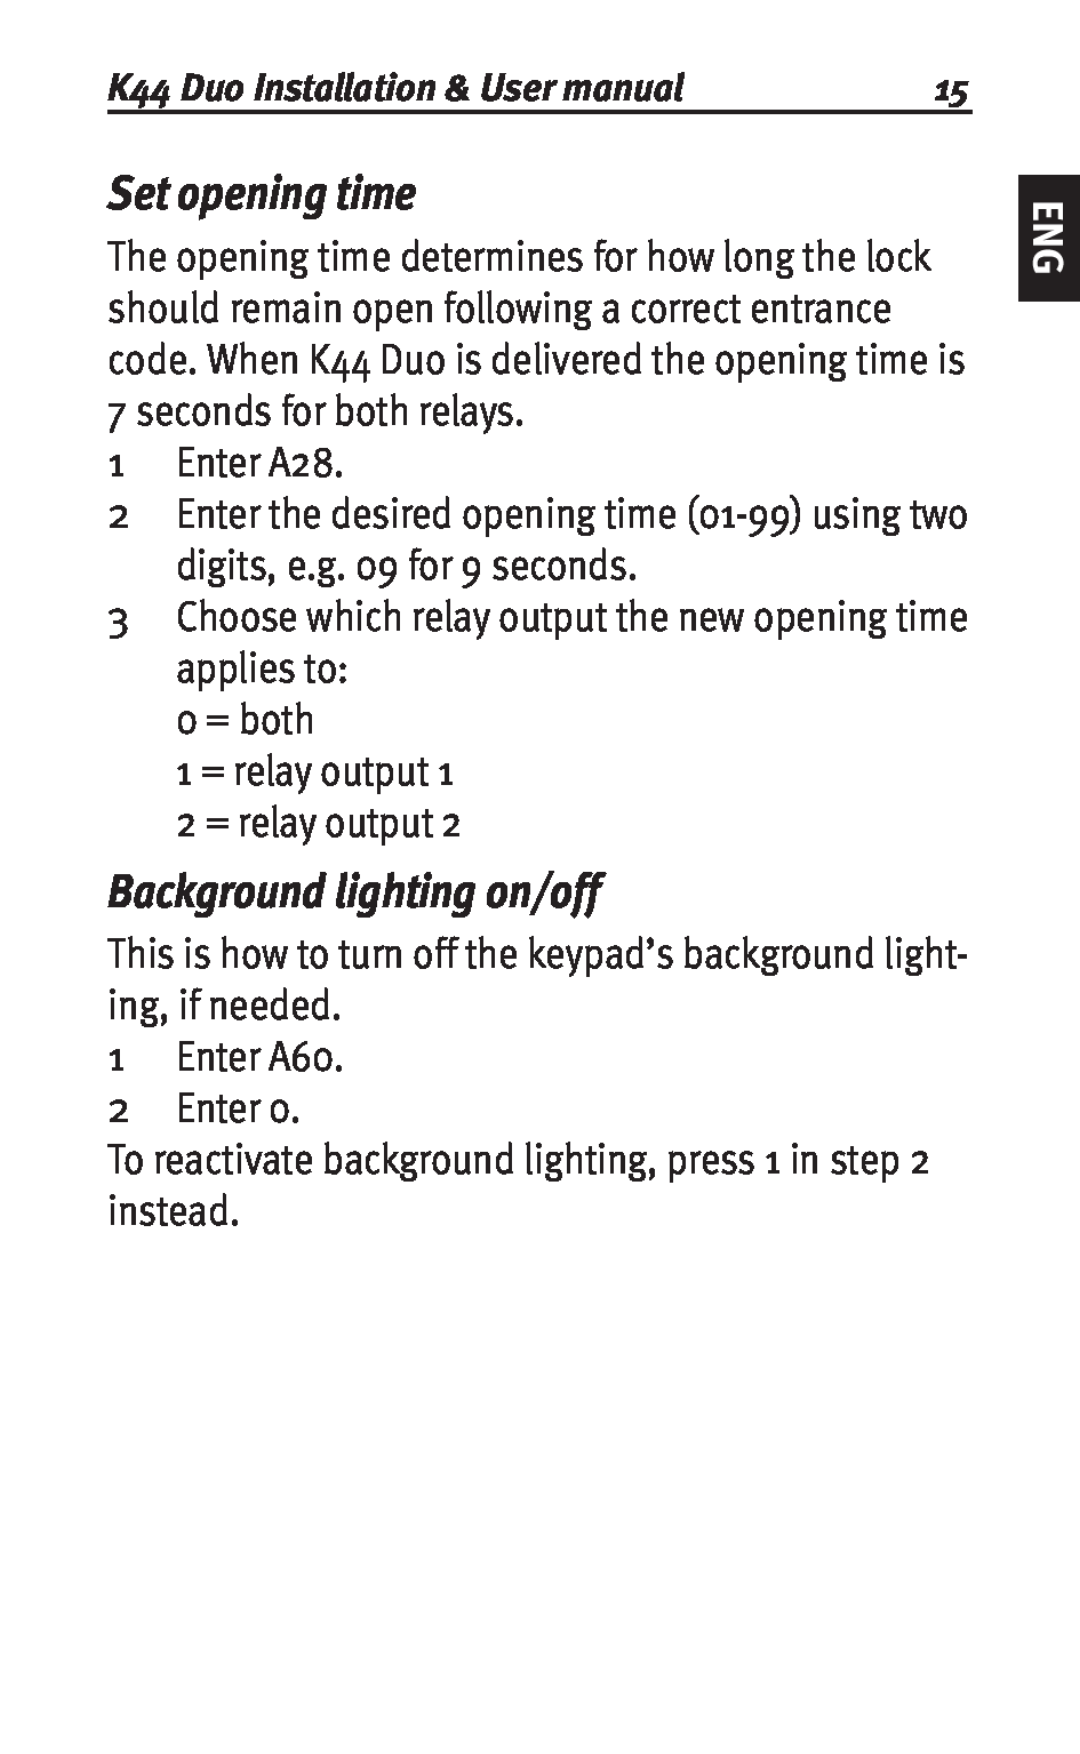 Siemens K44 user manual Set opening time, Background lighting on/off 